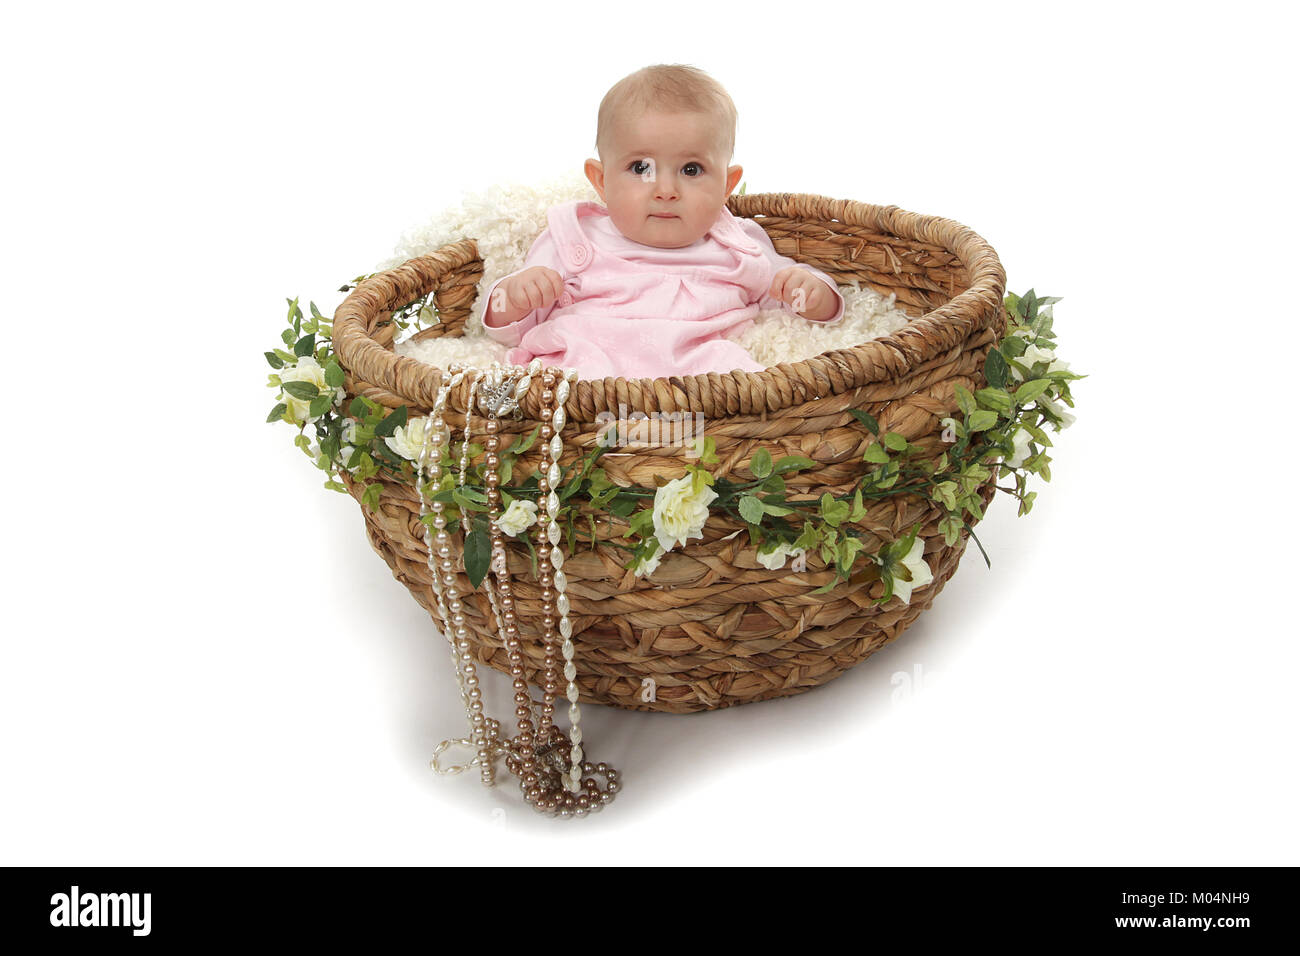 6 month old little girl in vintage wicker basket Stock Photo